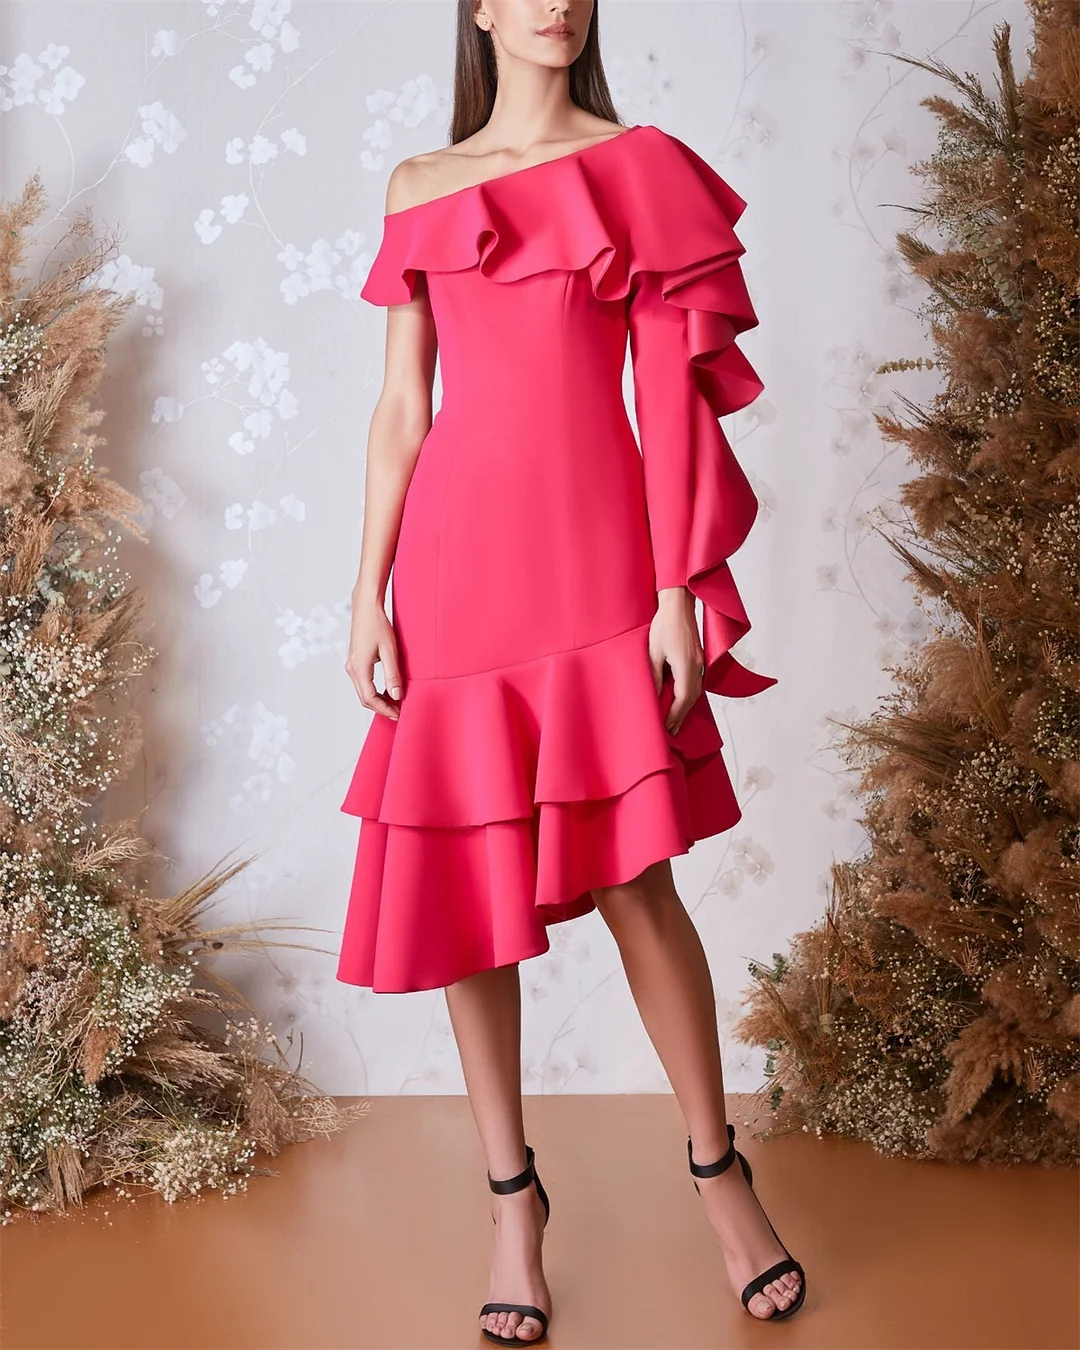 Women's Pink One Shoulder Sleeve Ruffle Dress